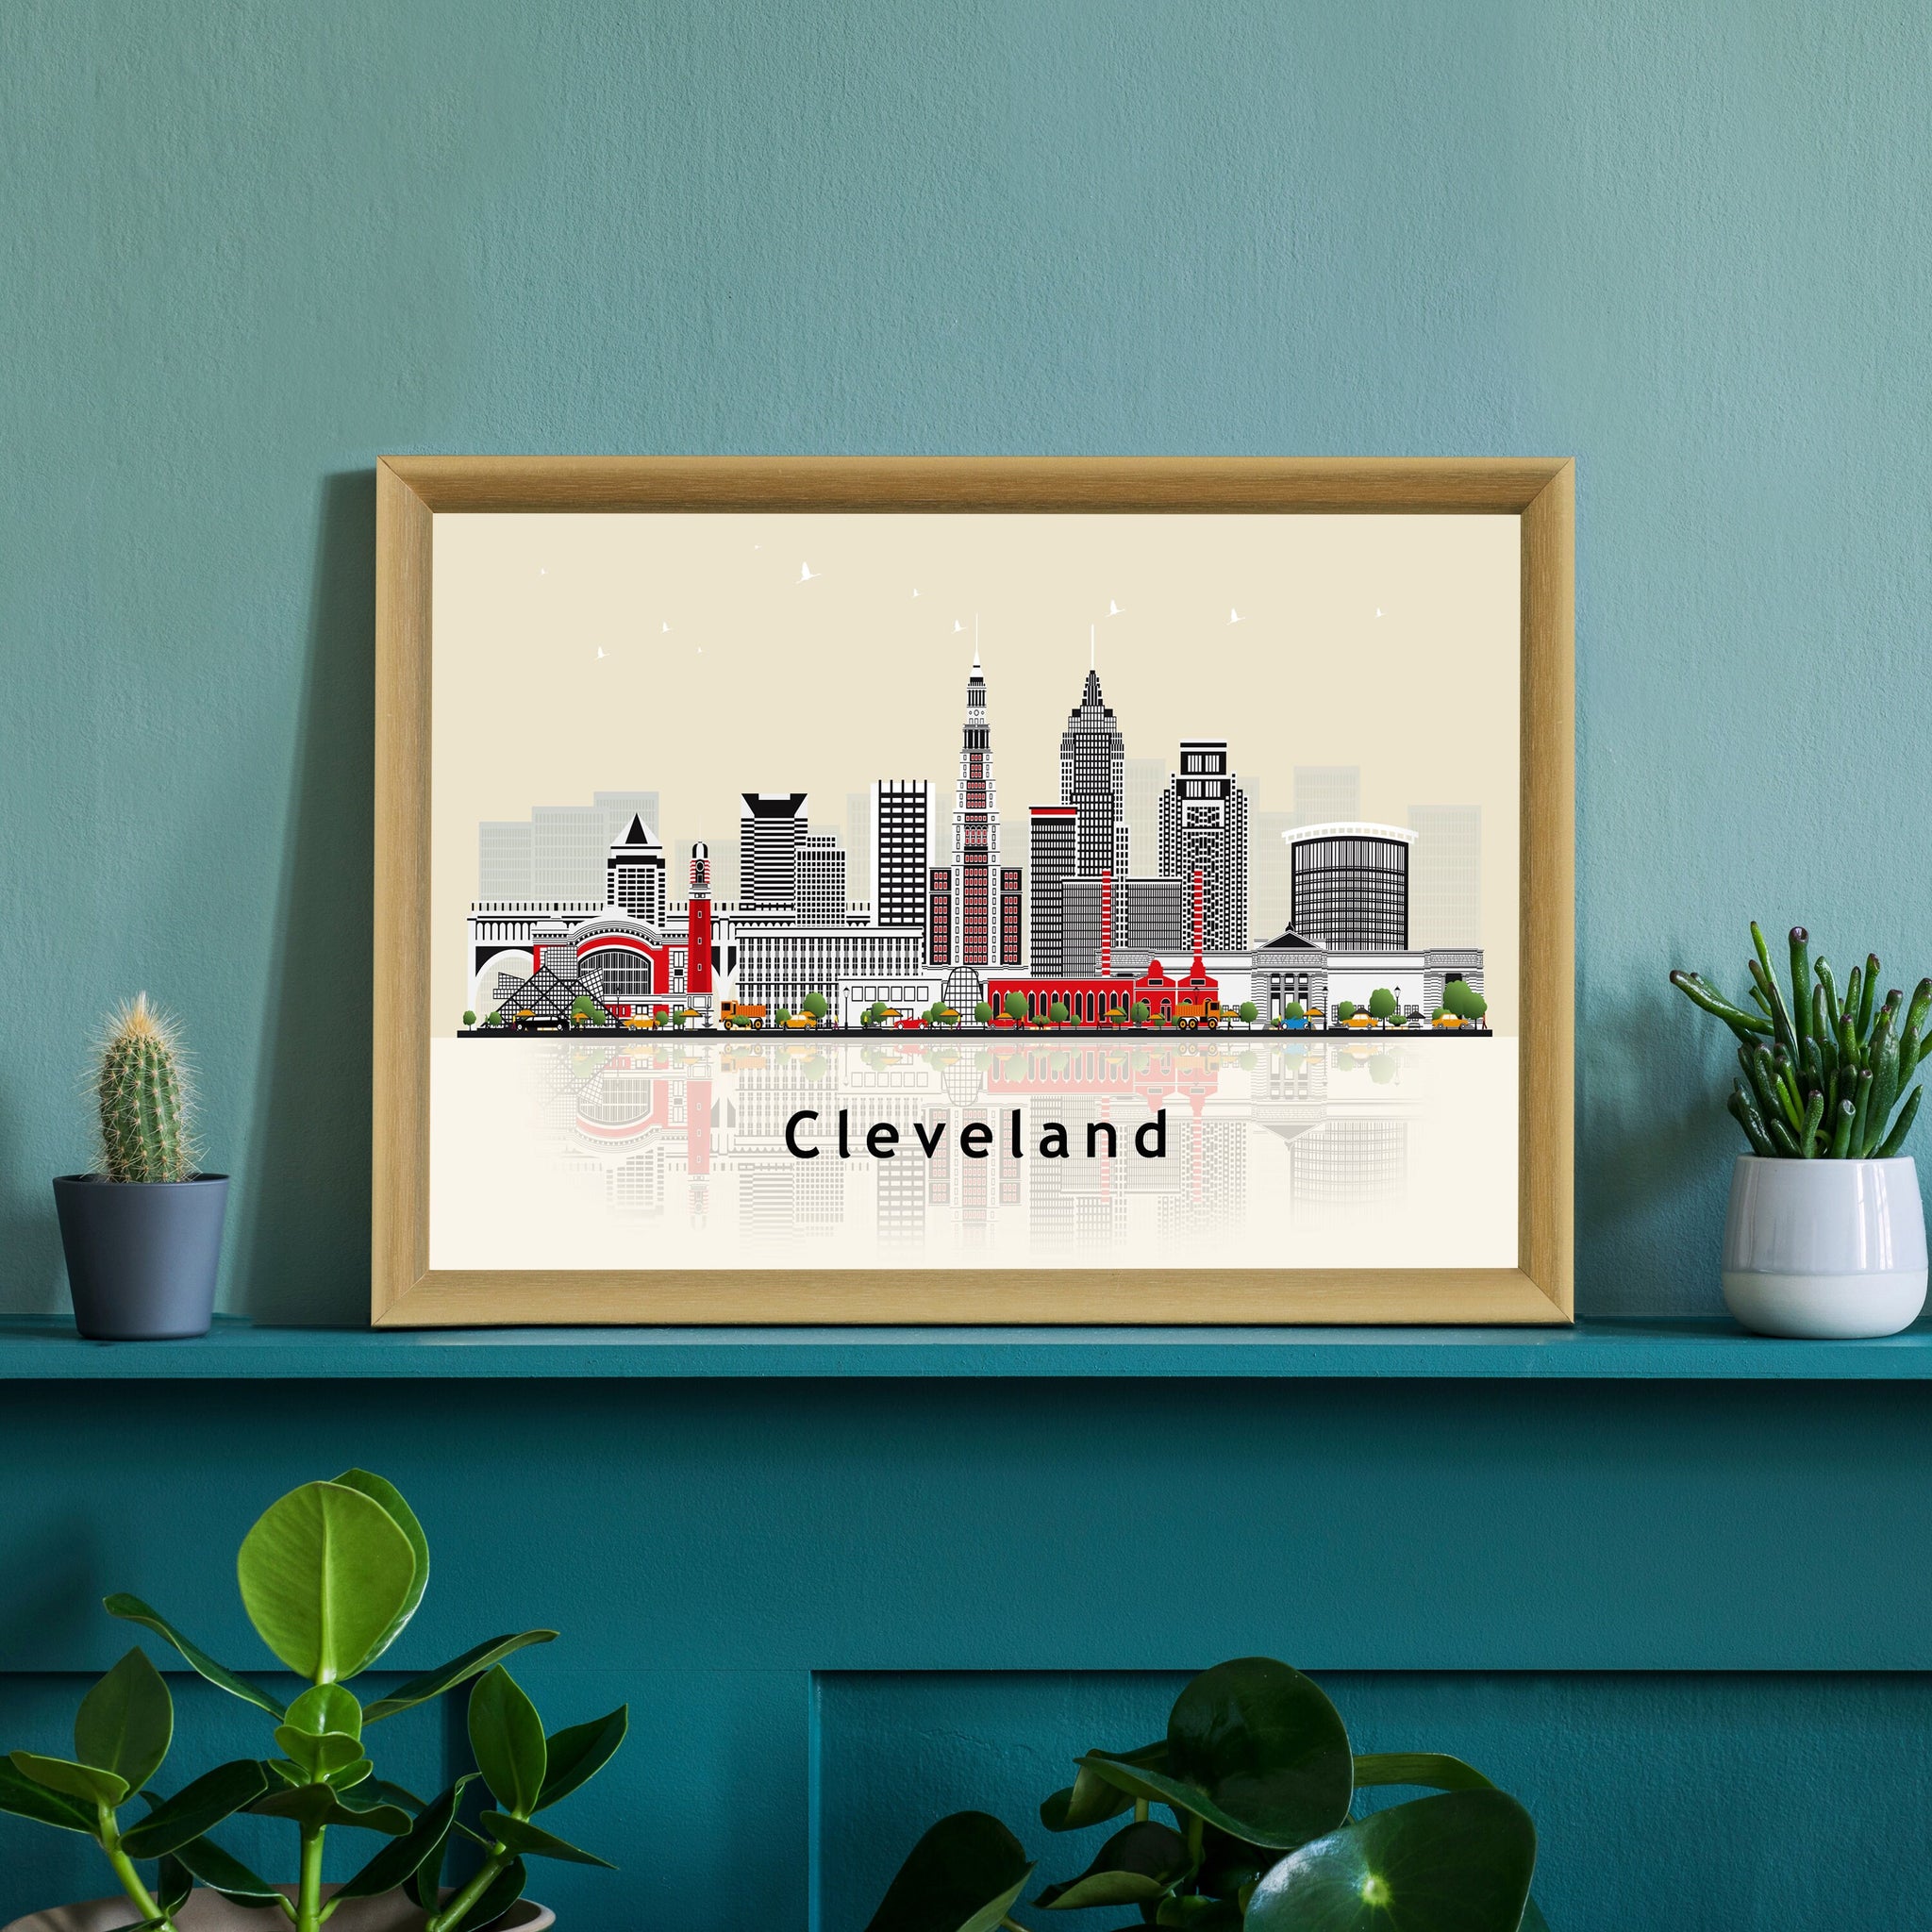 CLEVELAND OHIO Illustration skyline poster, Ohio state modern skyline cityscape poster, Landmark poster art print, Home decoration idea